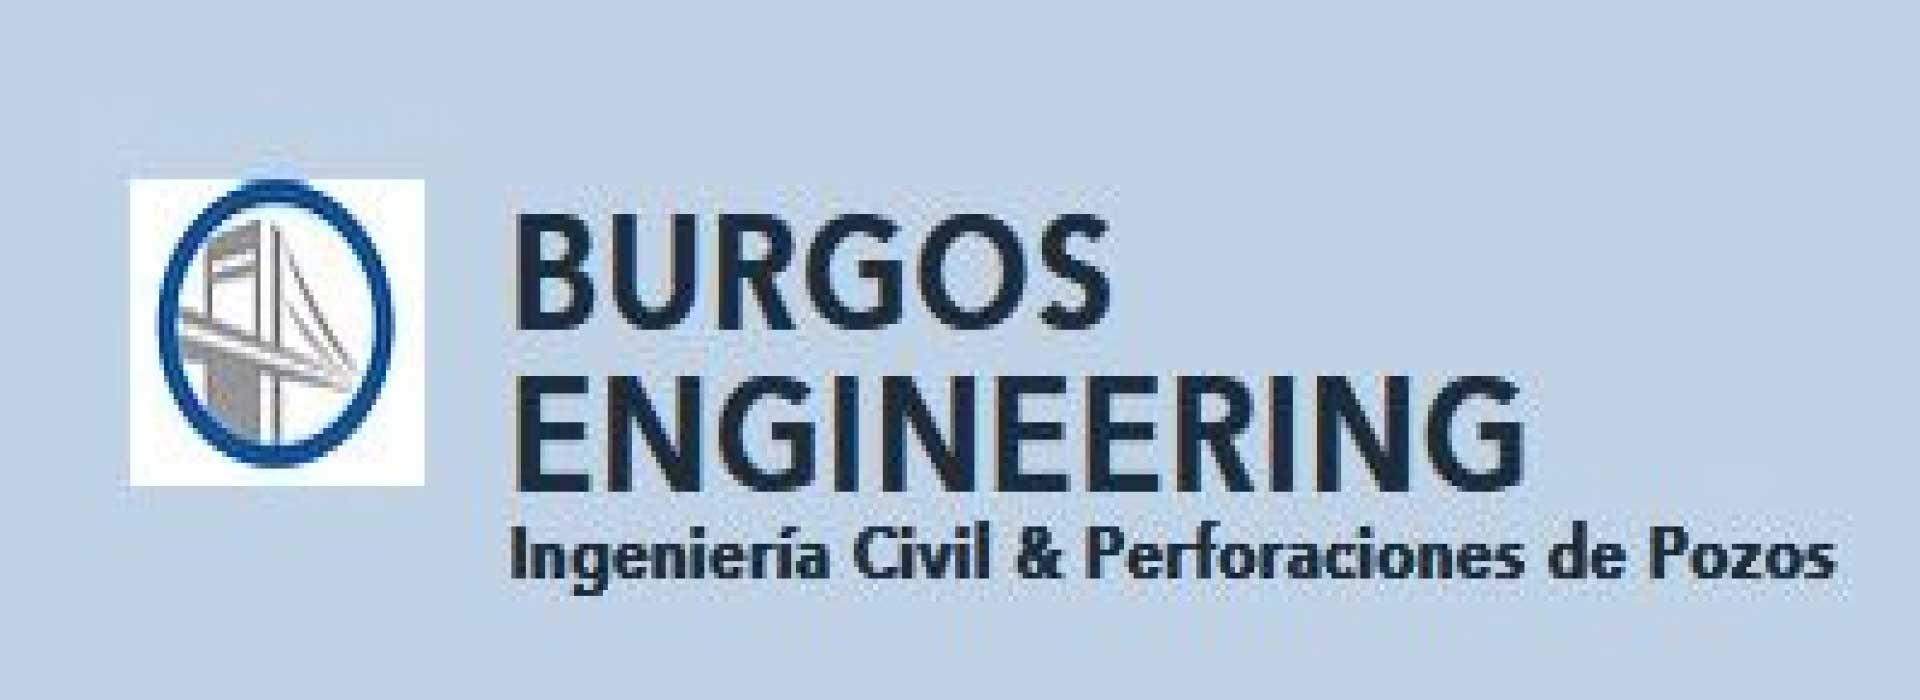 Burgos Engineering